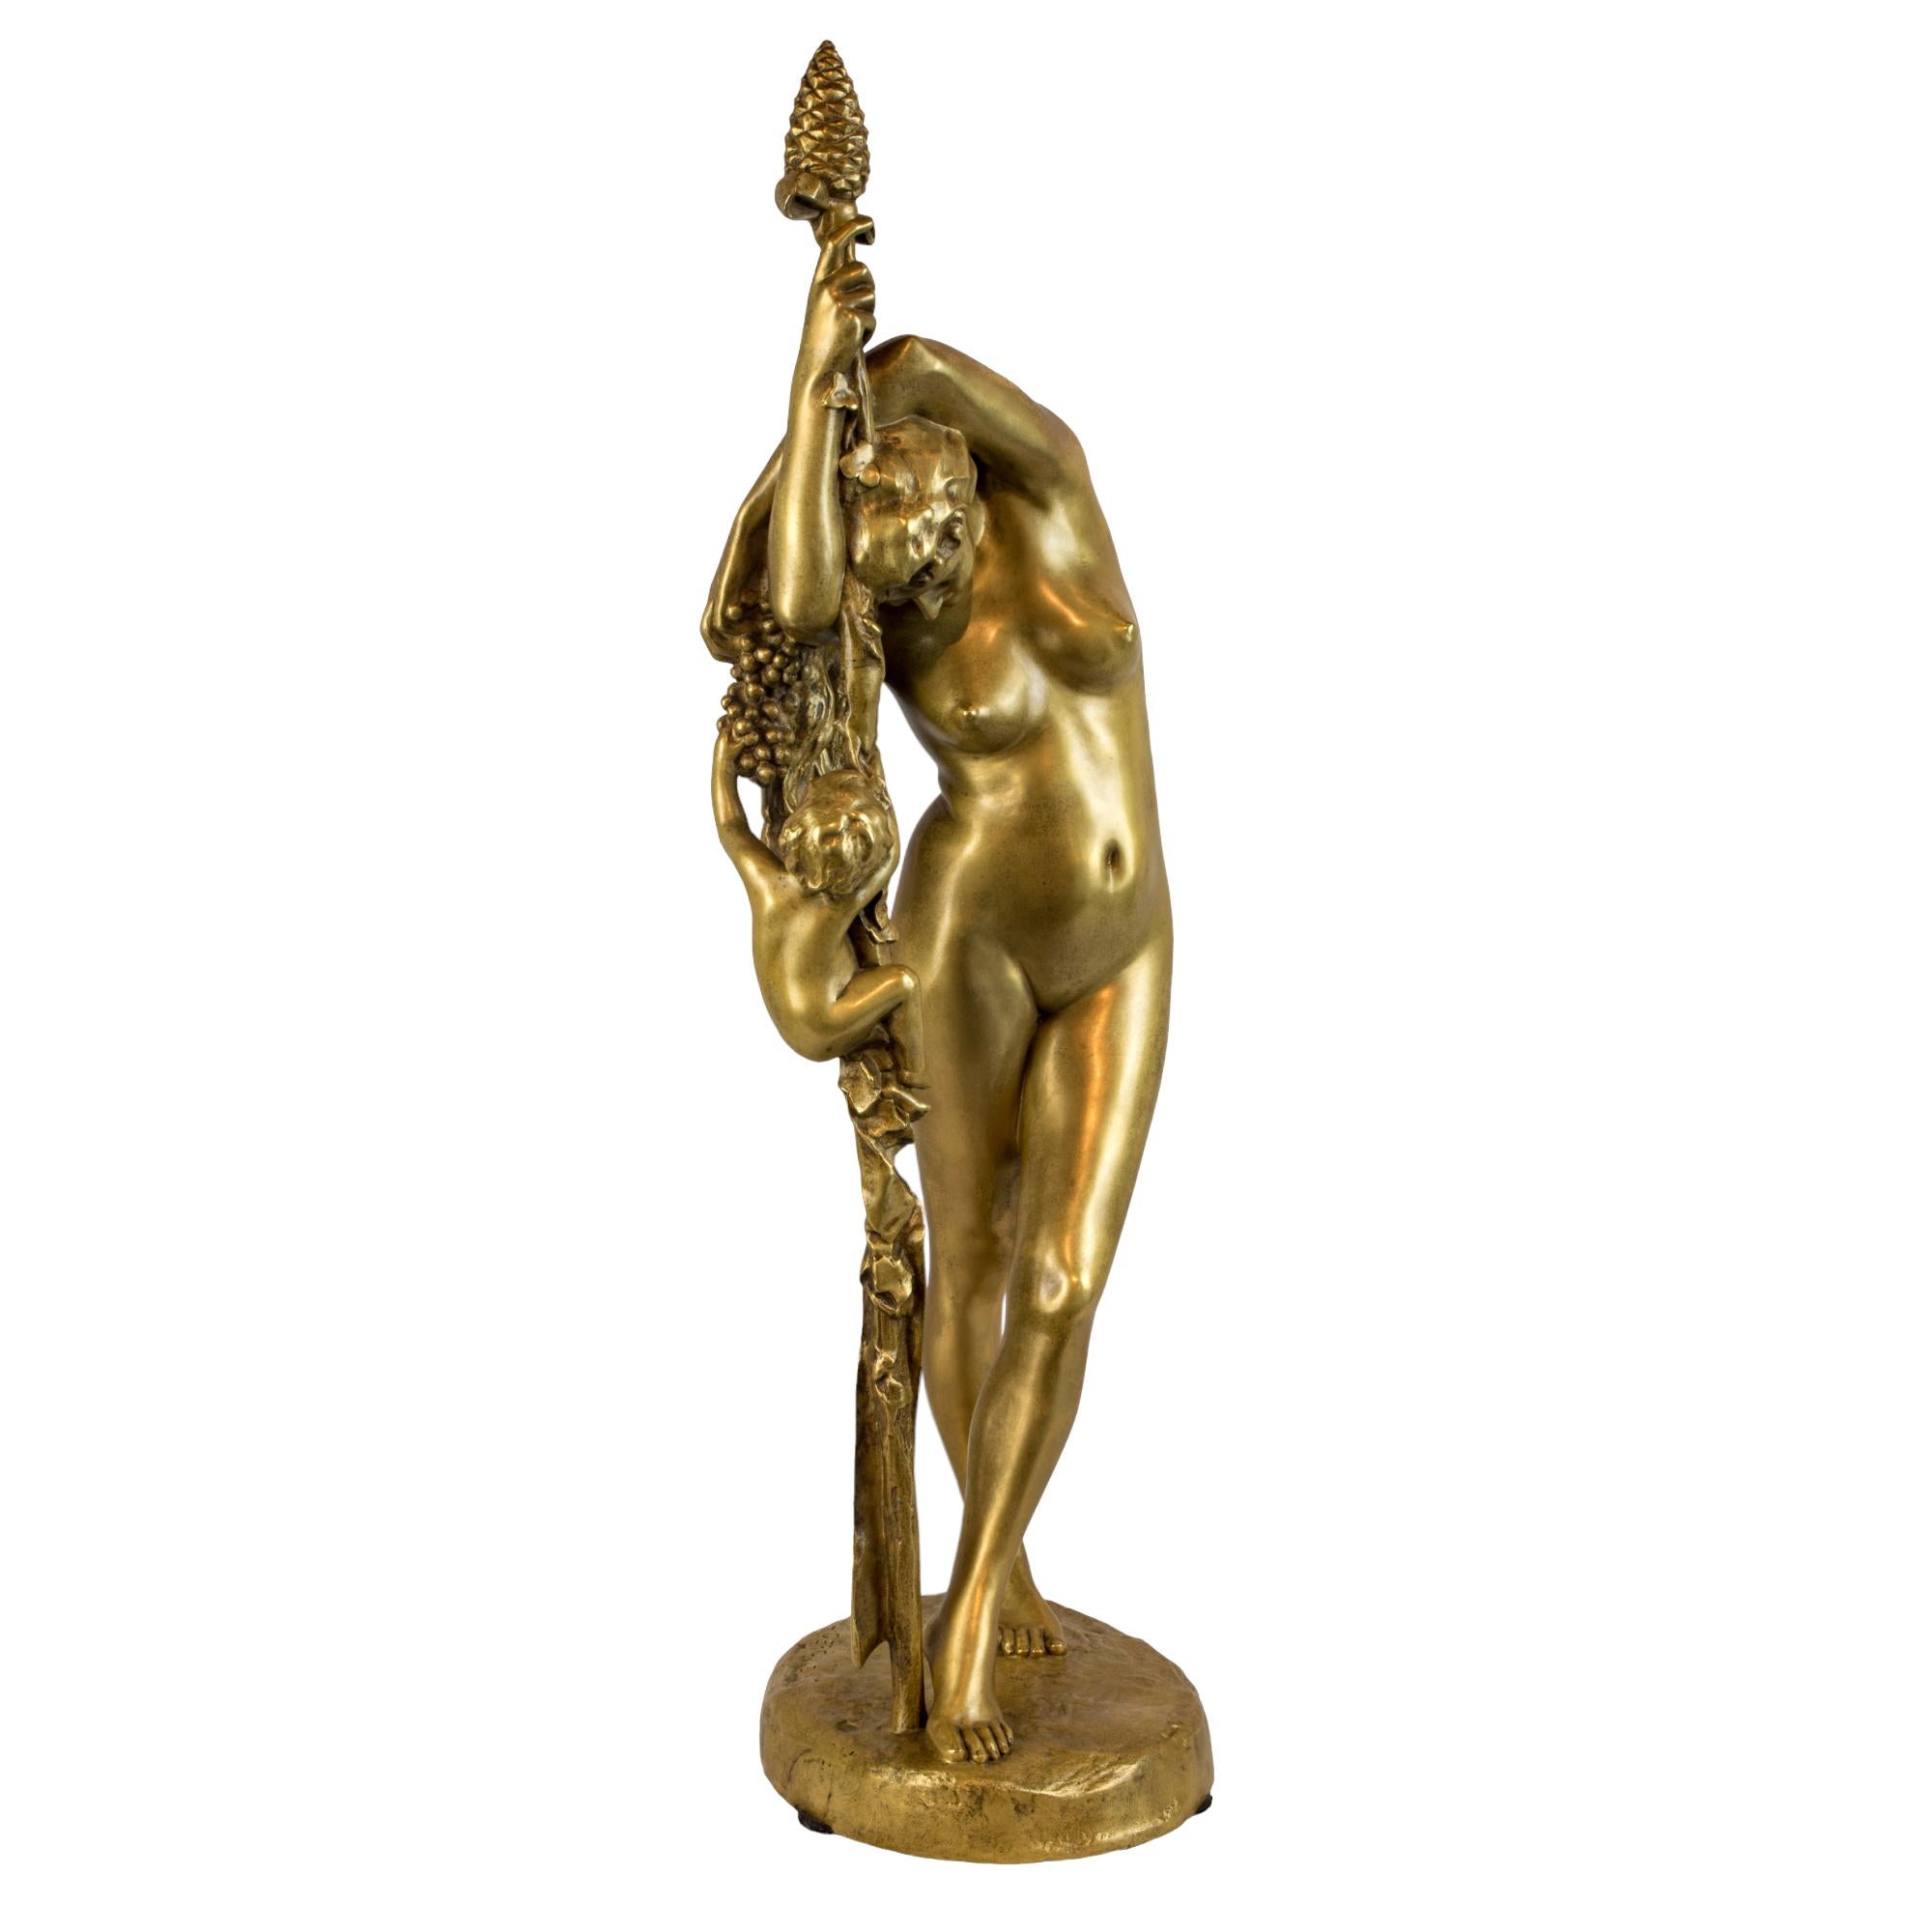 Fine 19th Century Gilt-Bronze Sculpture by JEAN-LEON GEROME

Title: L'Extase Bacchique: An Allegory of Abundance and Joy

Presenting 